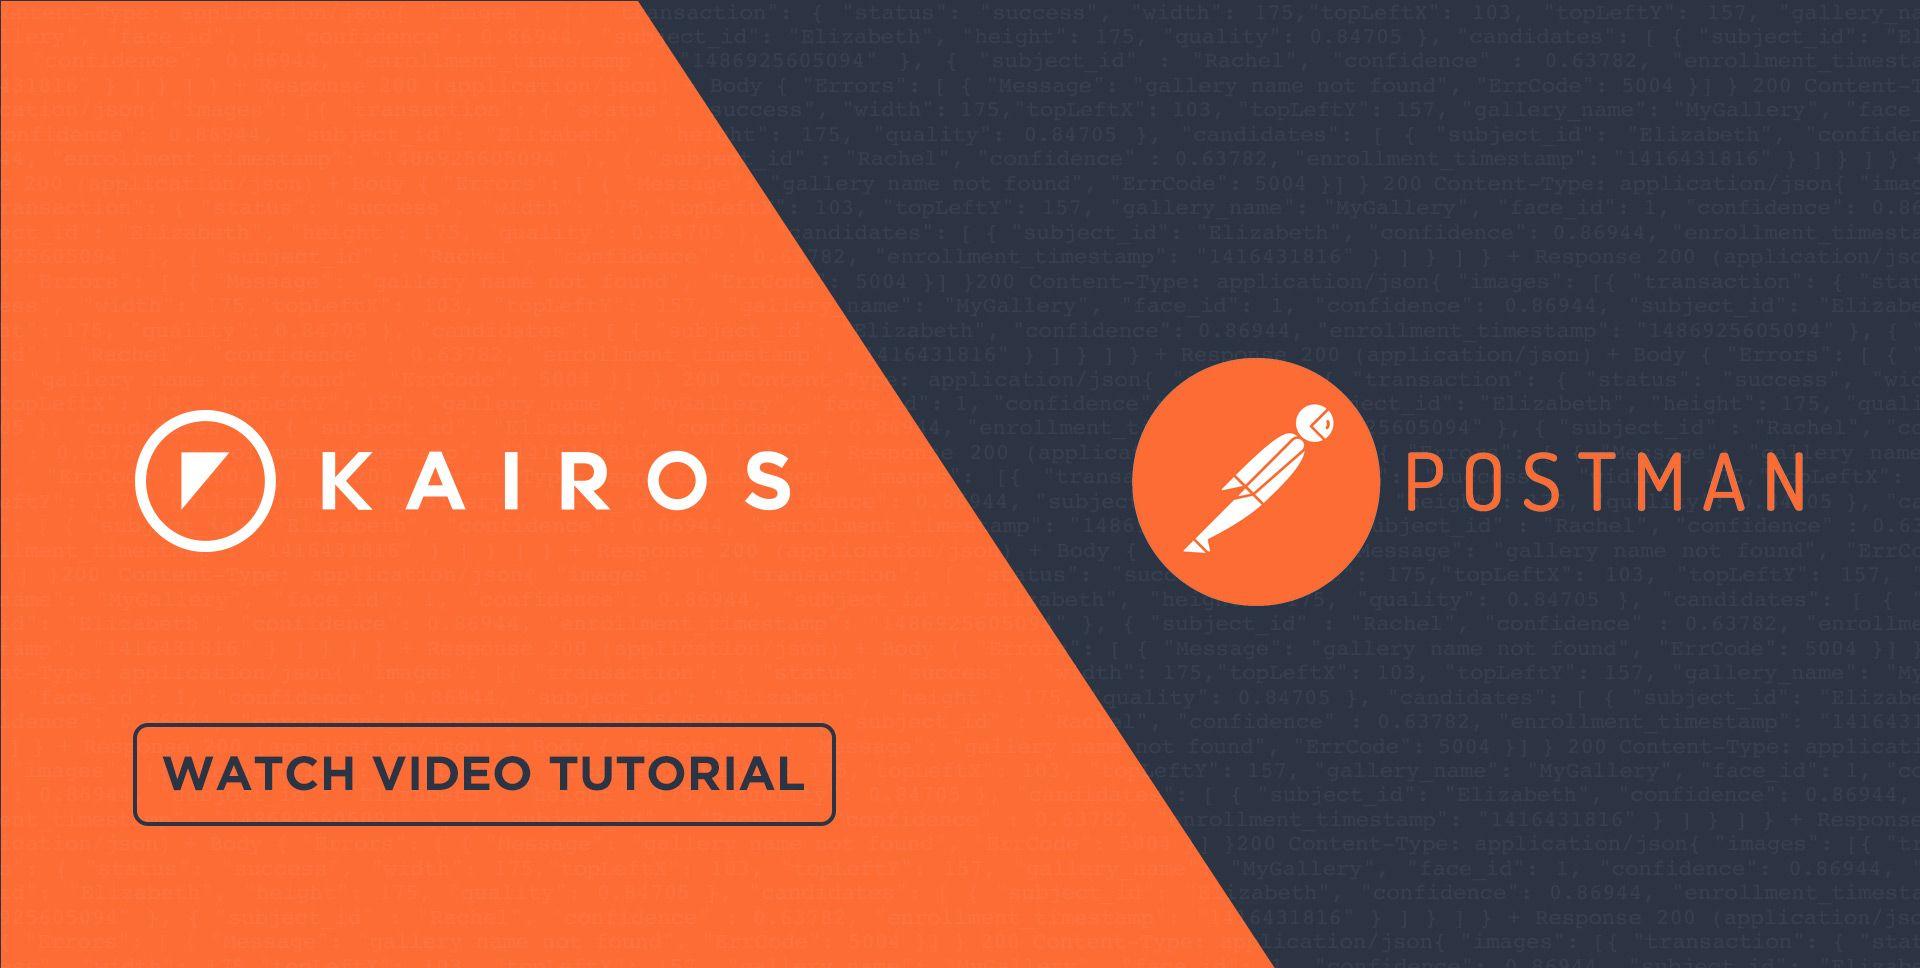 Postman Logo - The Best Way to Test Kairos' Facial Recognition API [VIDEO]